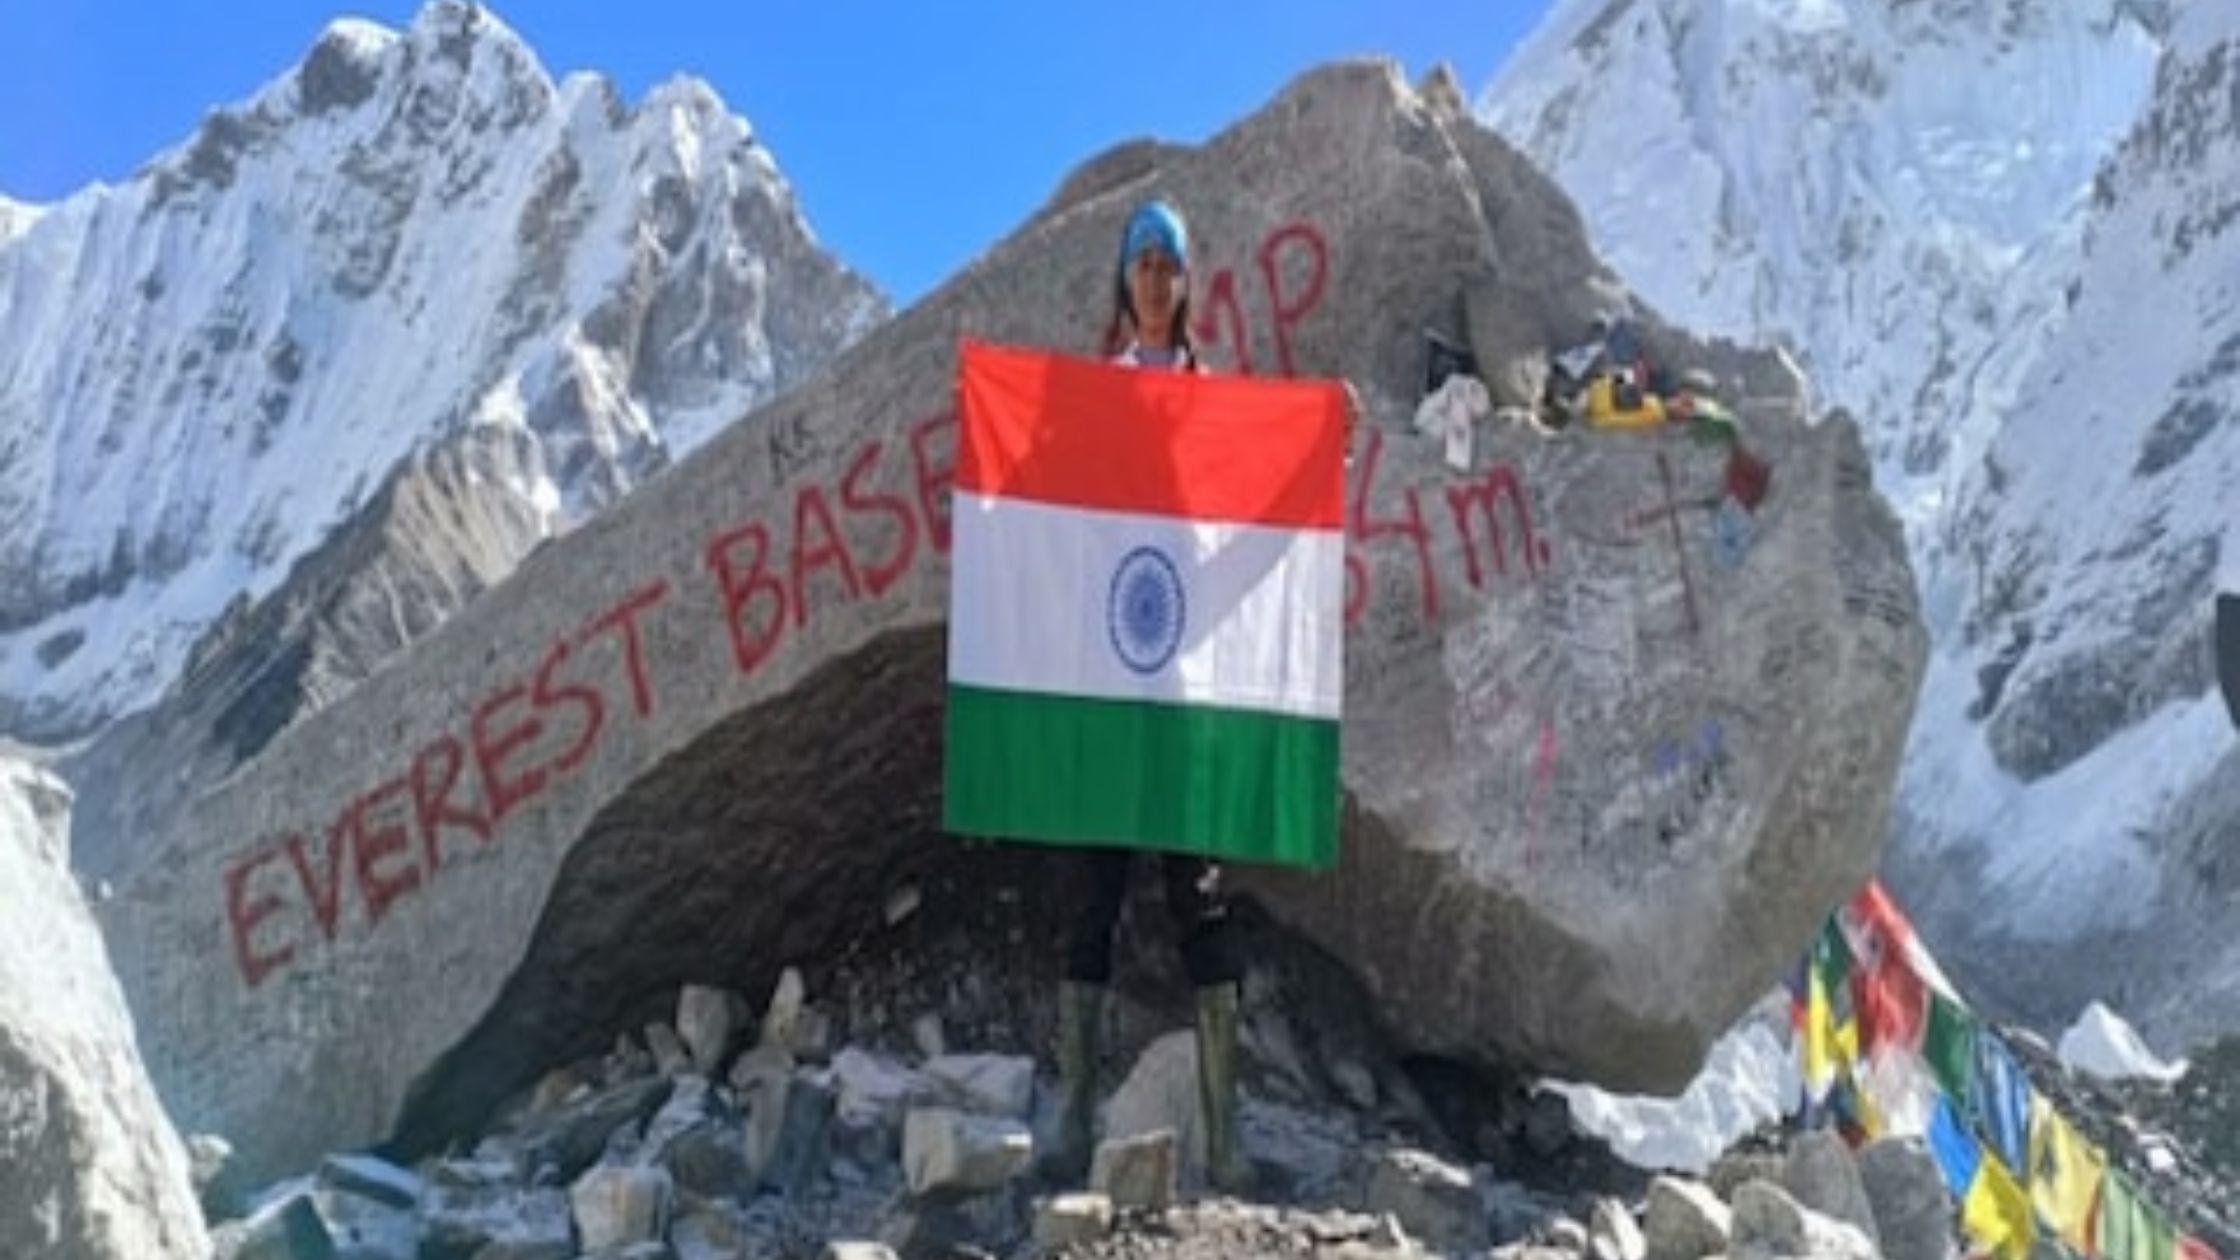 Neesha hoisted the tricolor on the highest peak of 18 thousand feet